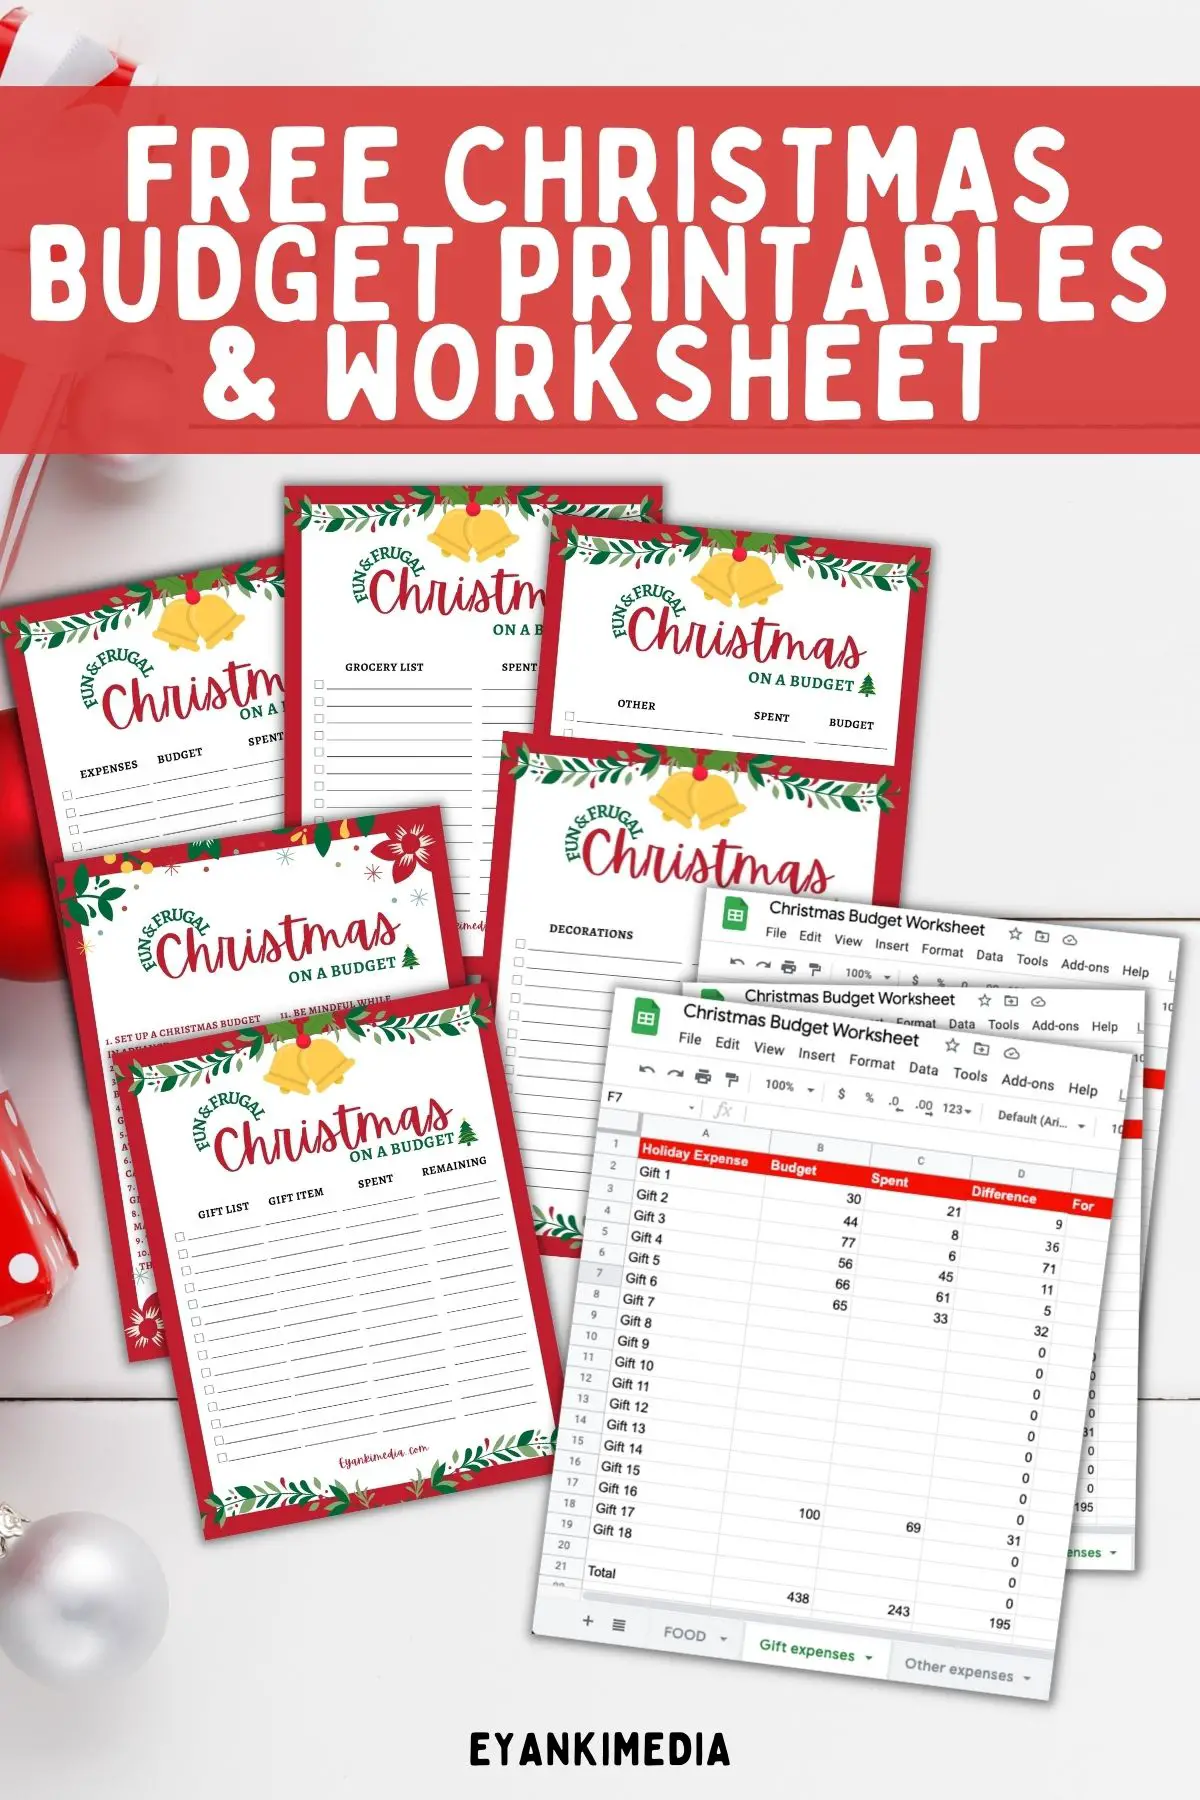 Free Christmas Budget printables & worksheet